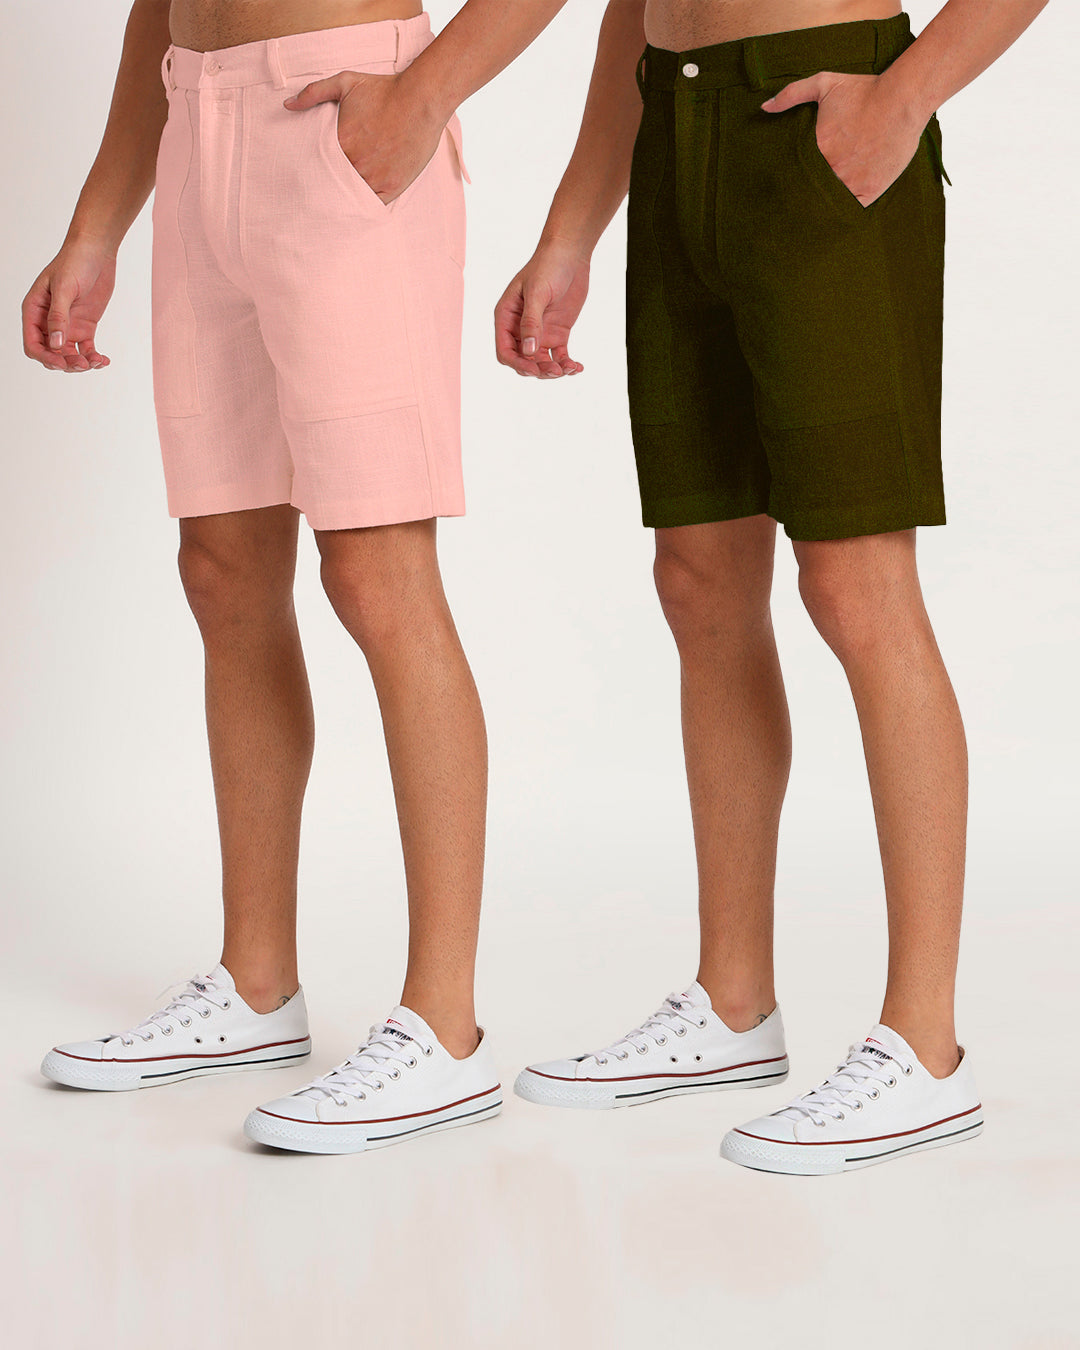 Combo : Patch Pocket Playtime Spring Green & Fondant Pink Men's Shorts